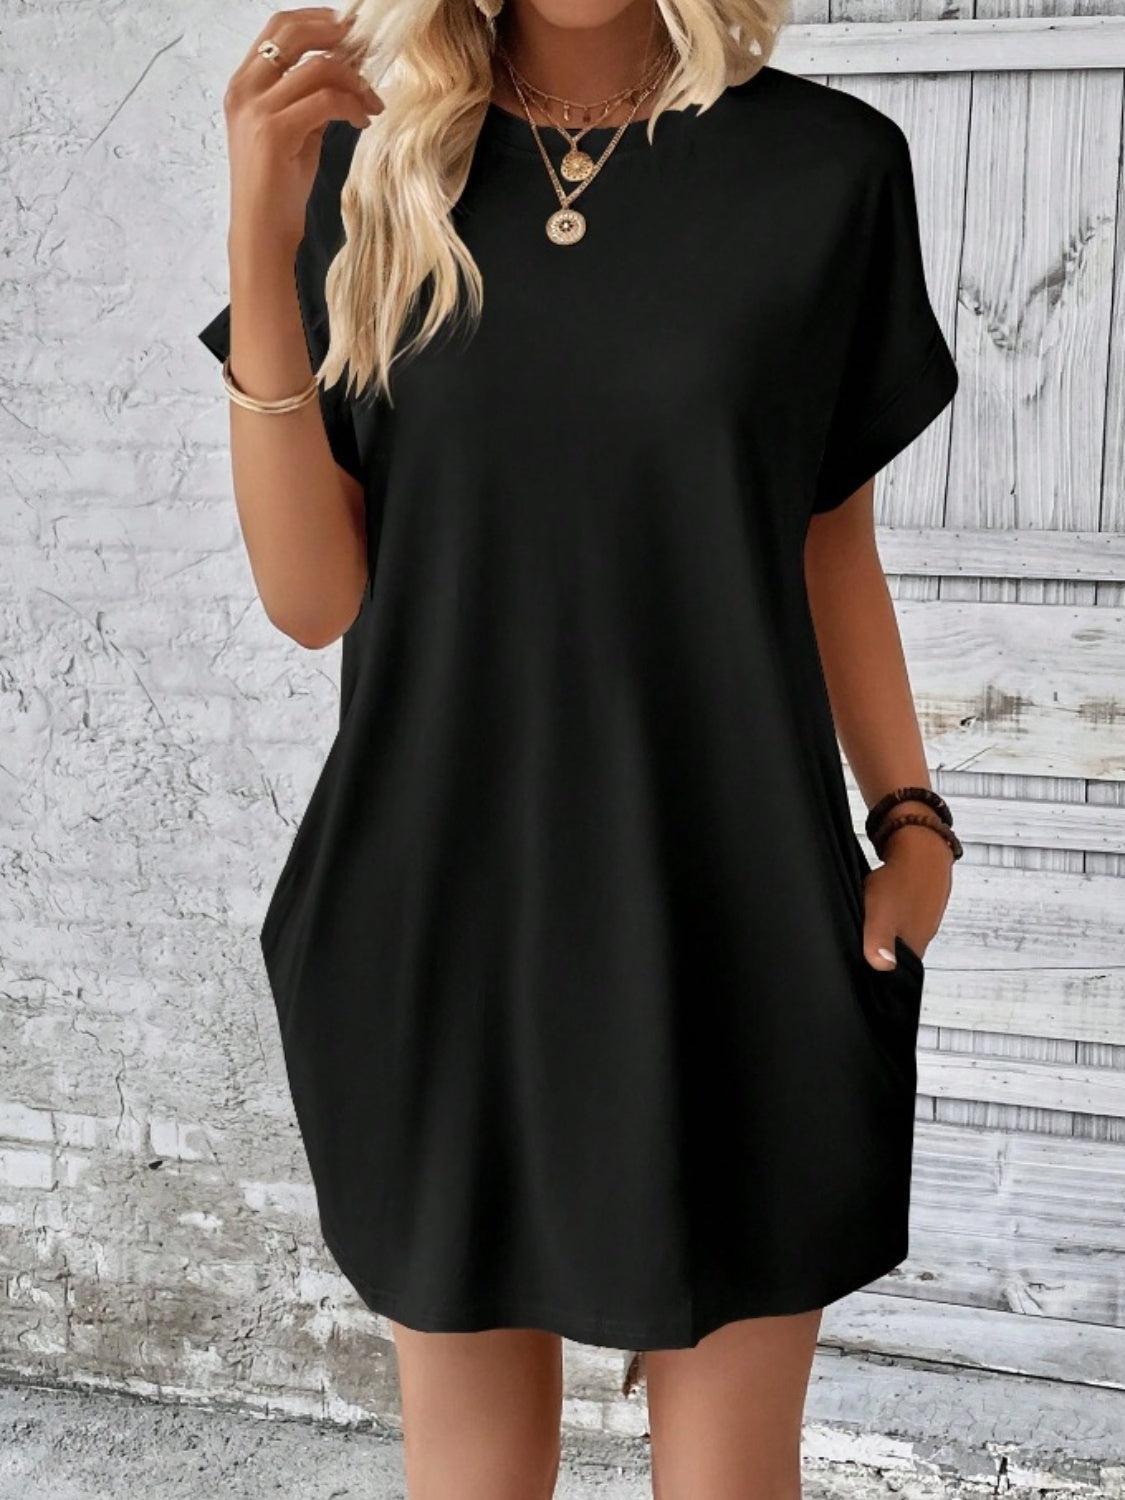 a woman wearing a black shirt dress